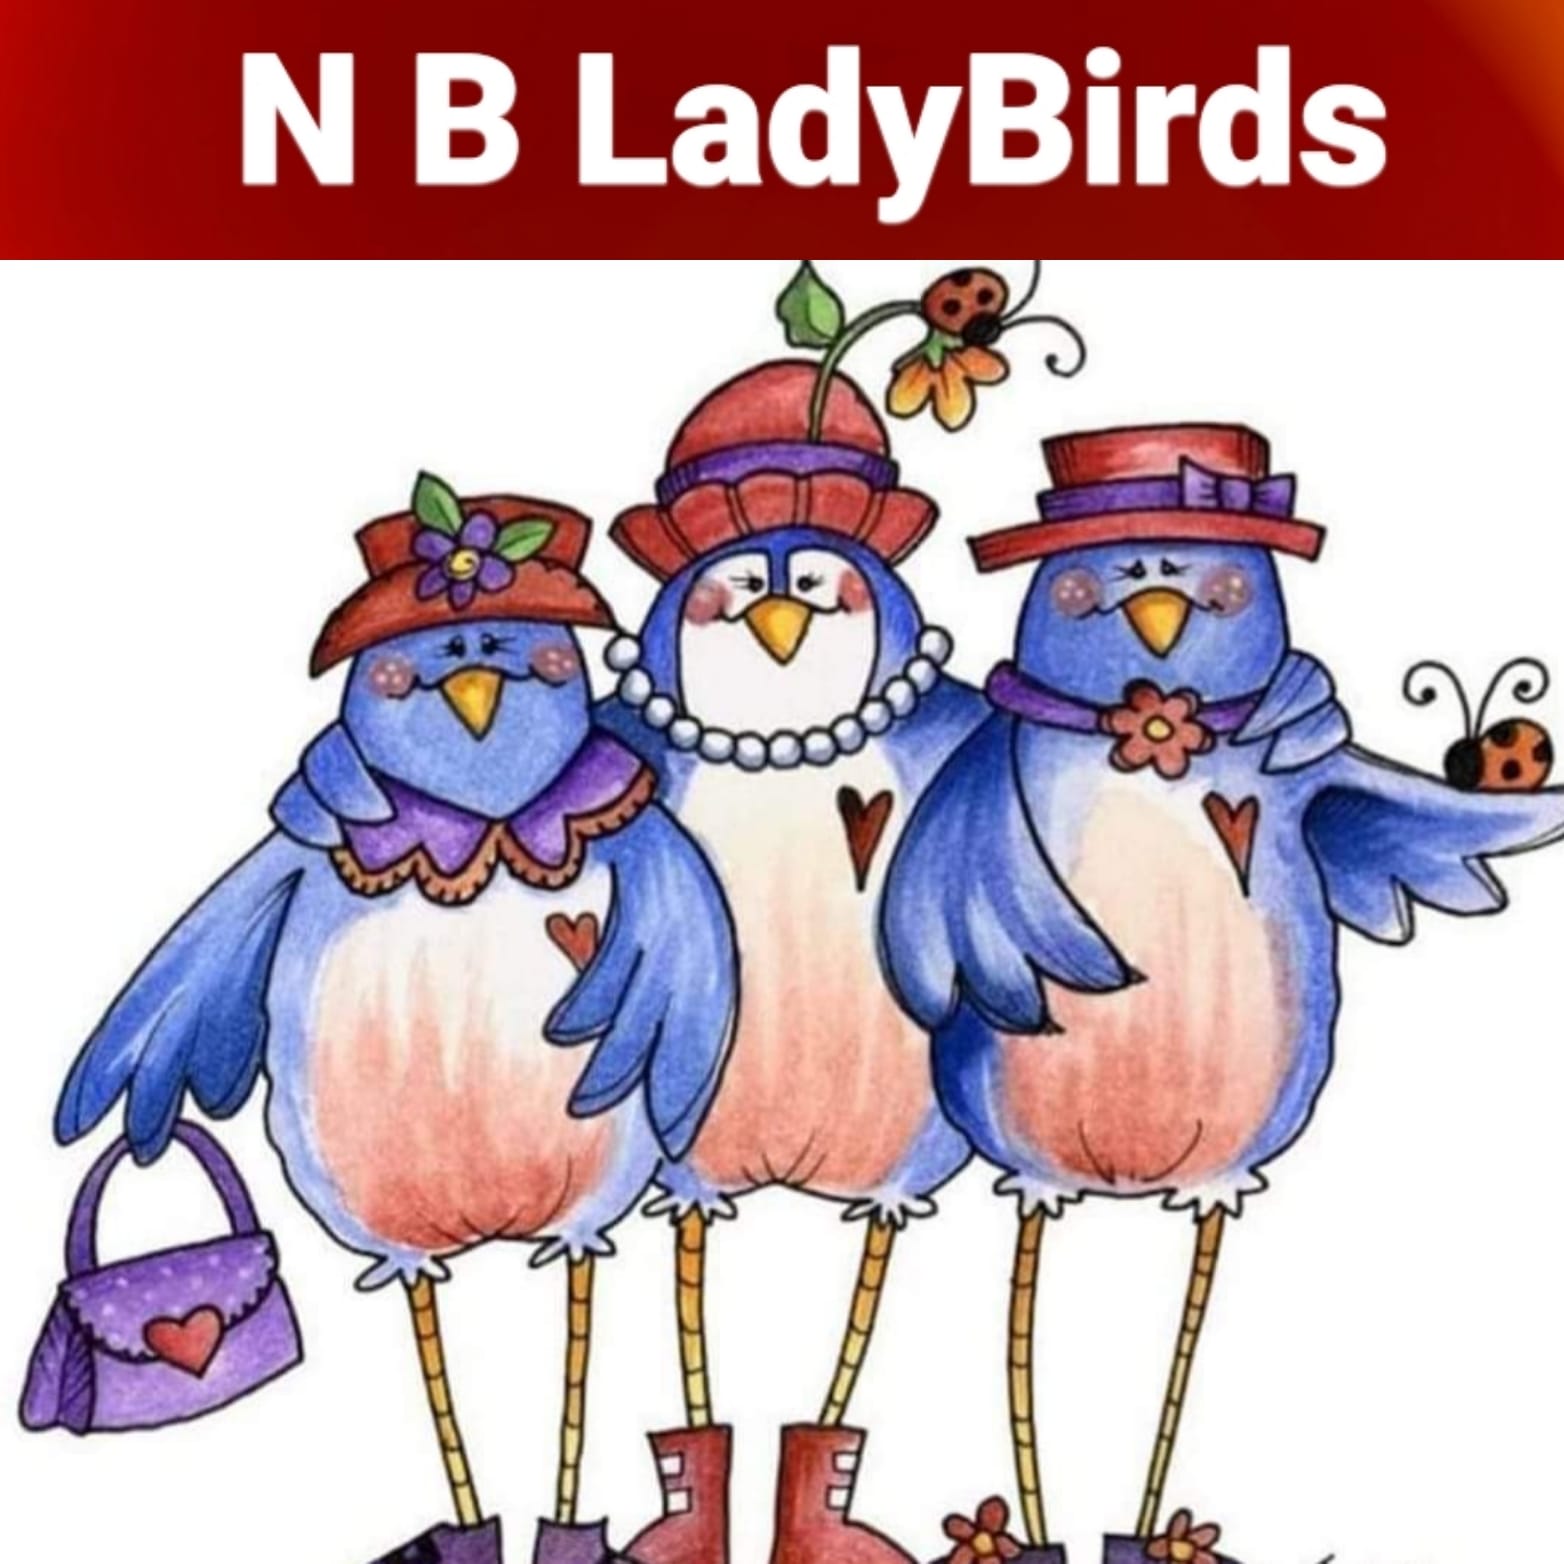 NB LadyBirds